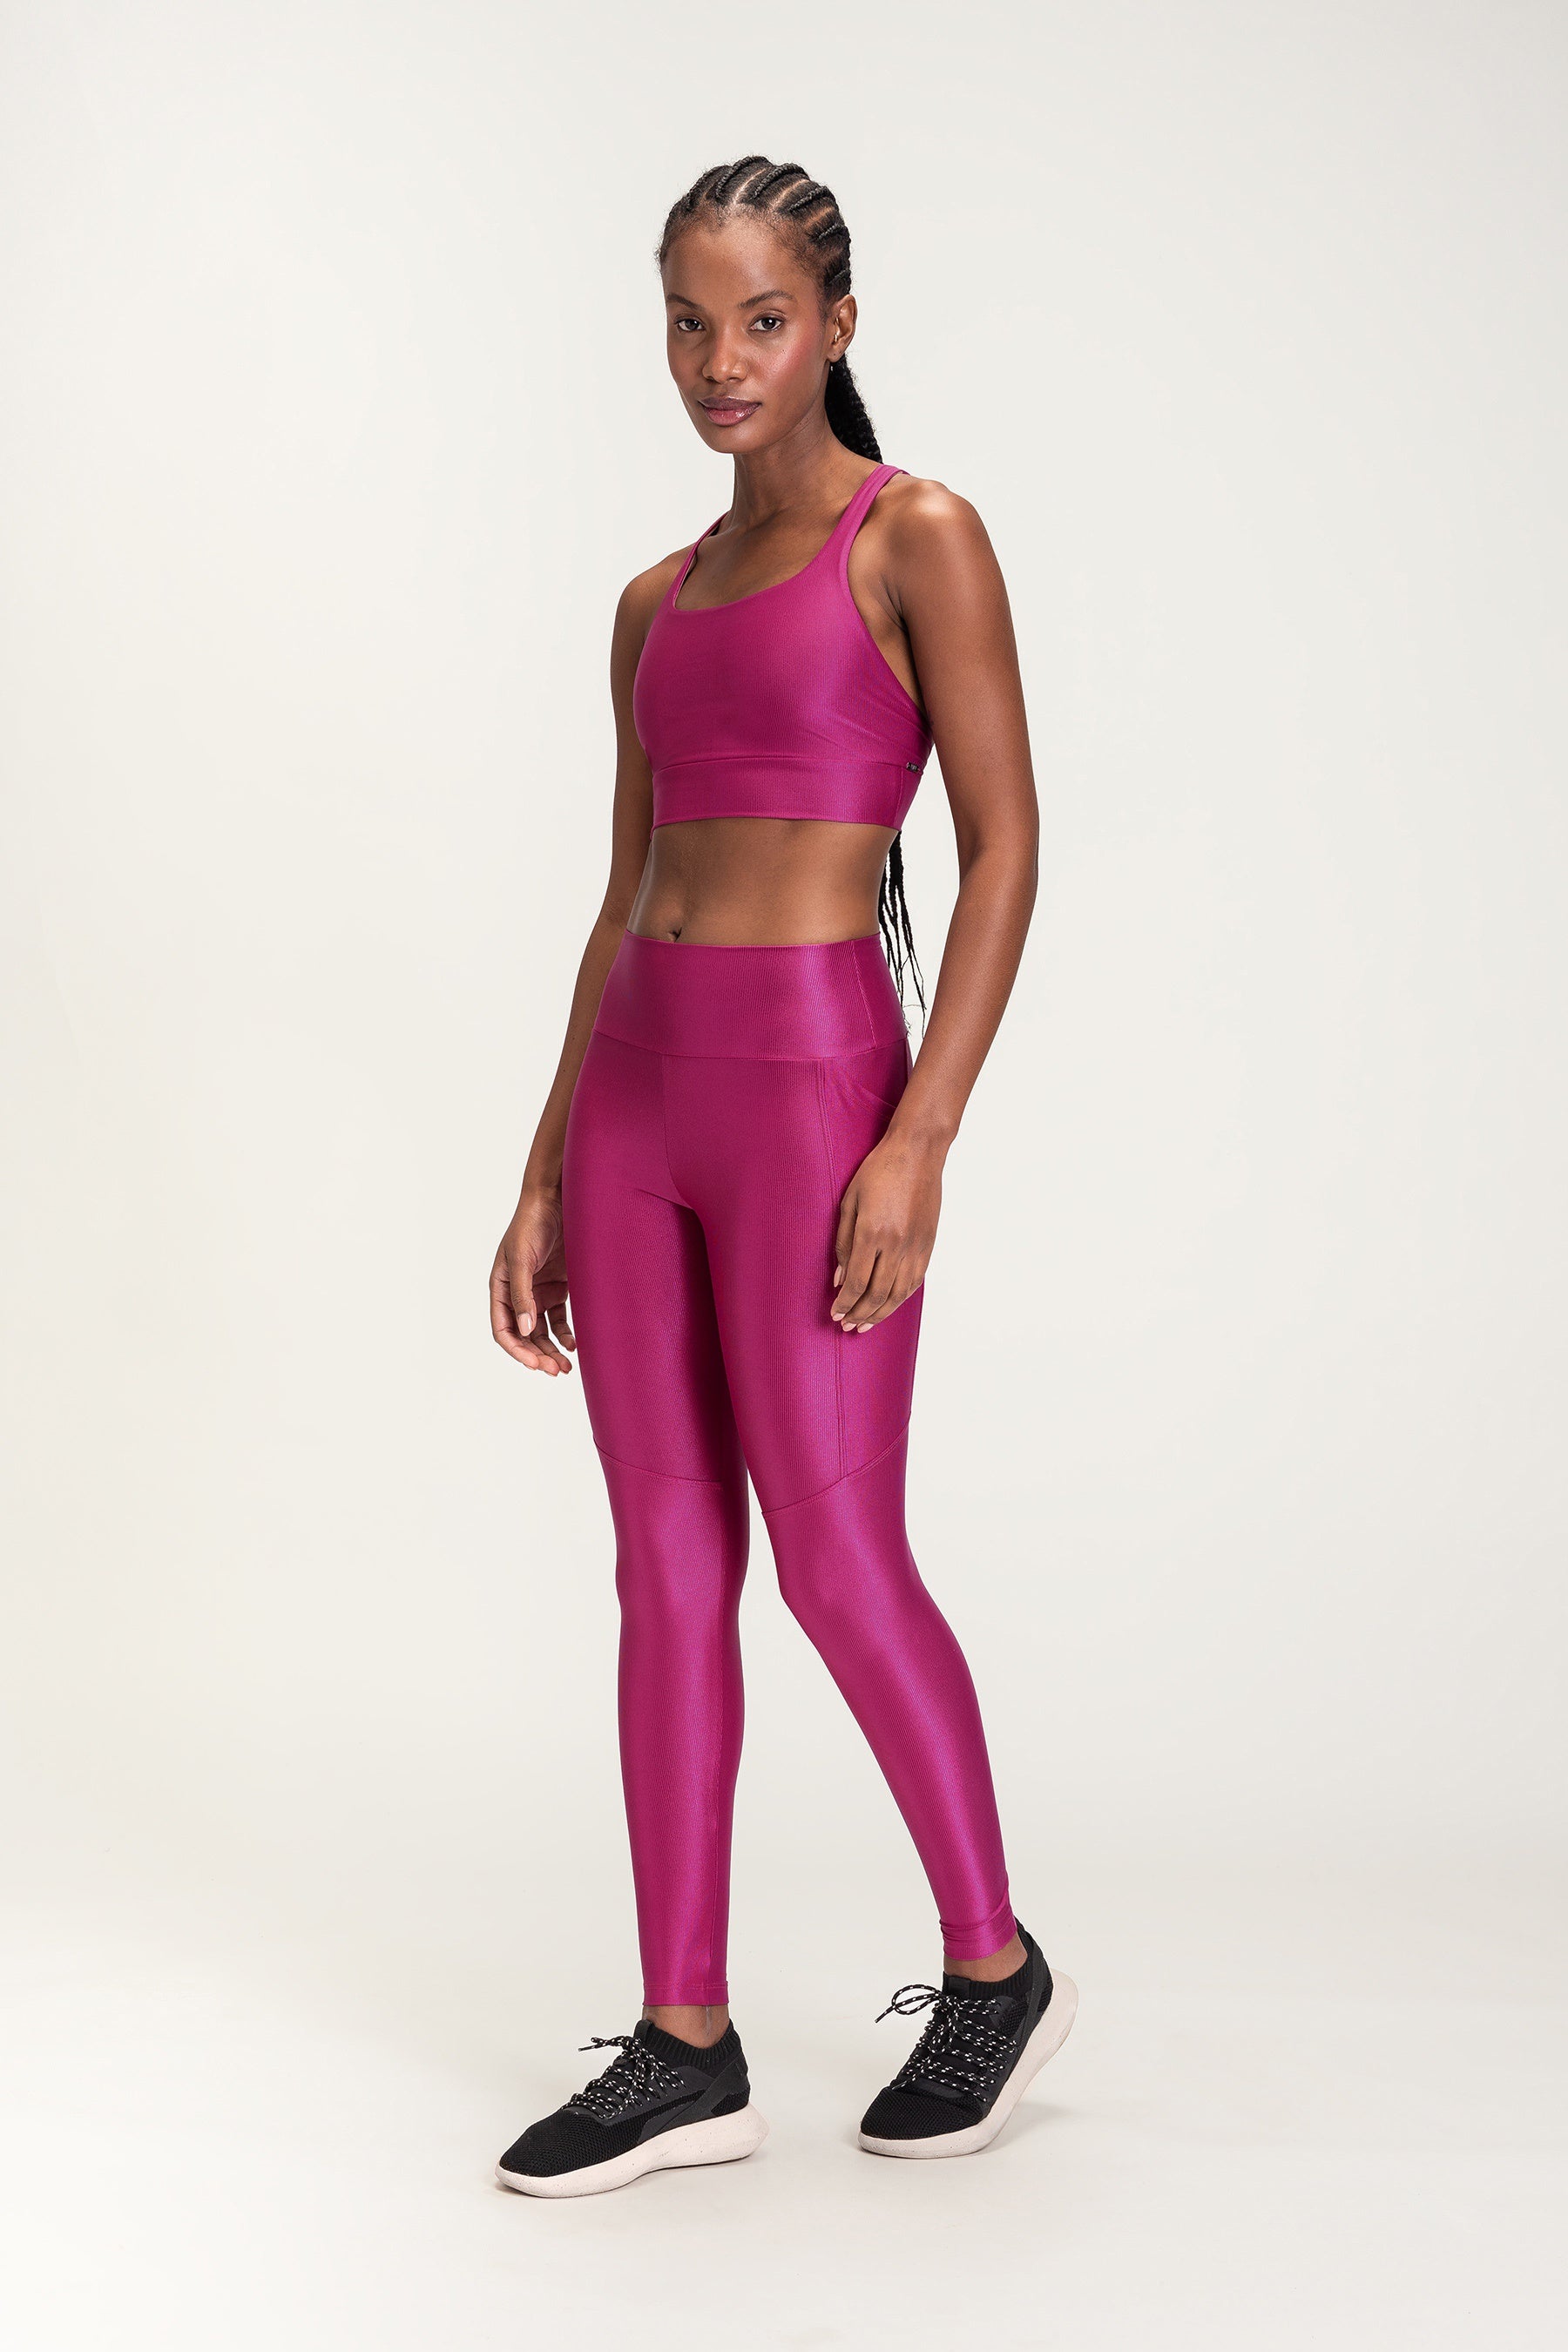 Victoria's Secret Pink Maroon Burgundy Leggings Size S - 44% off